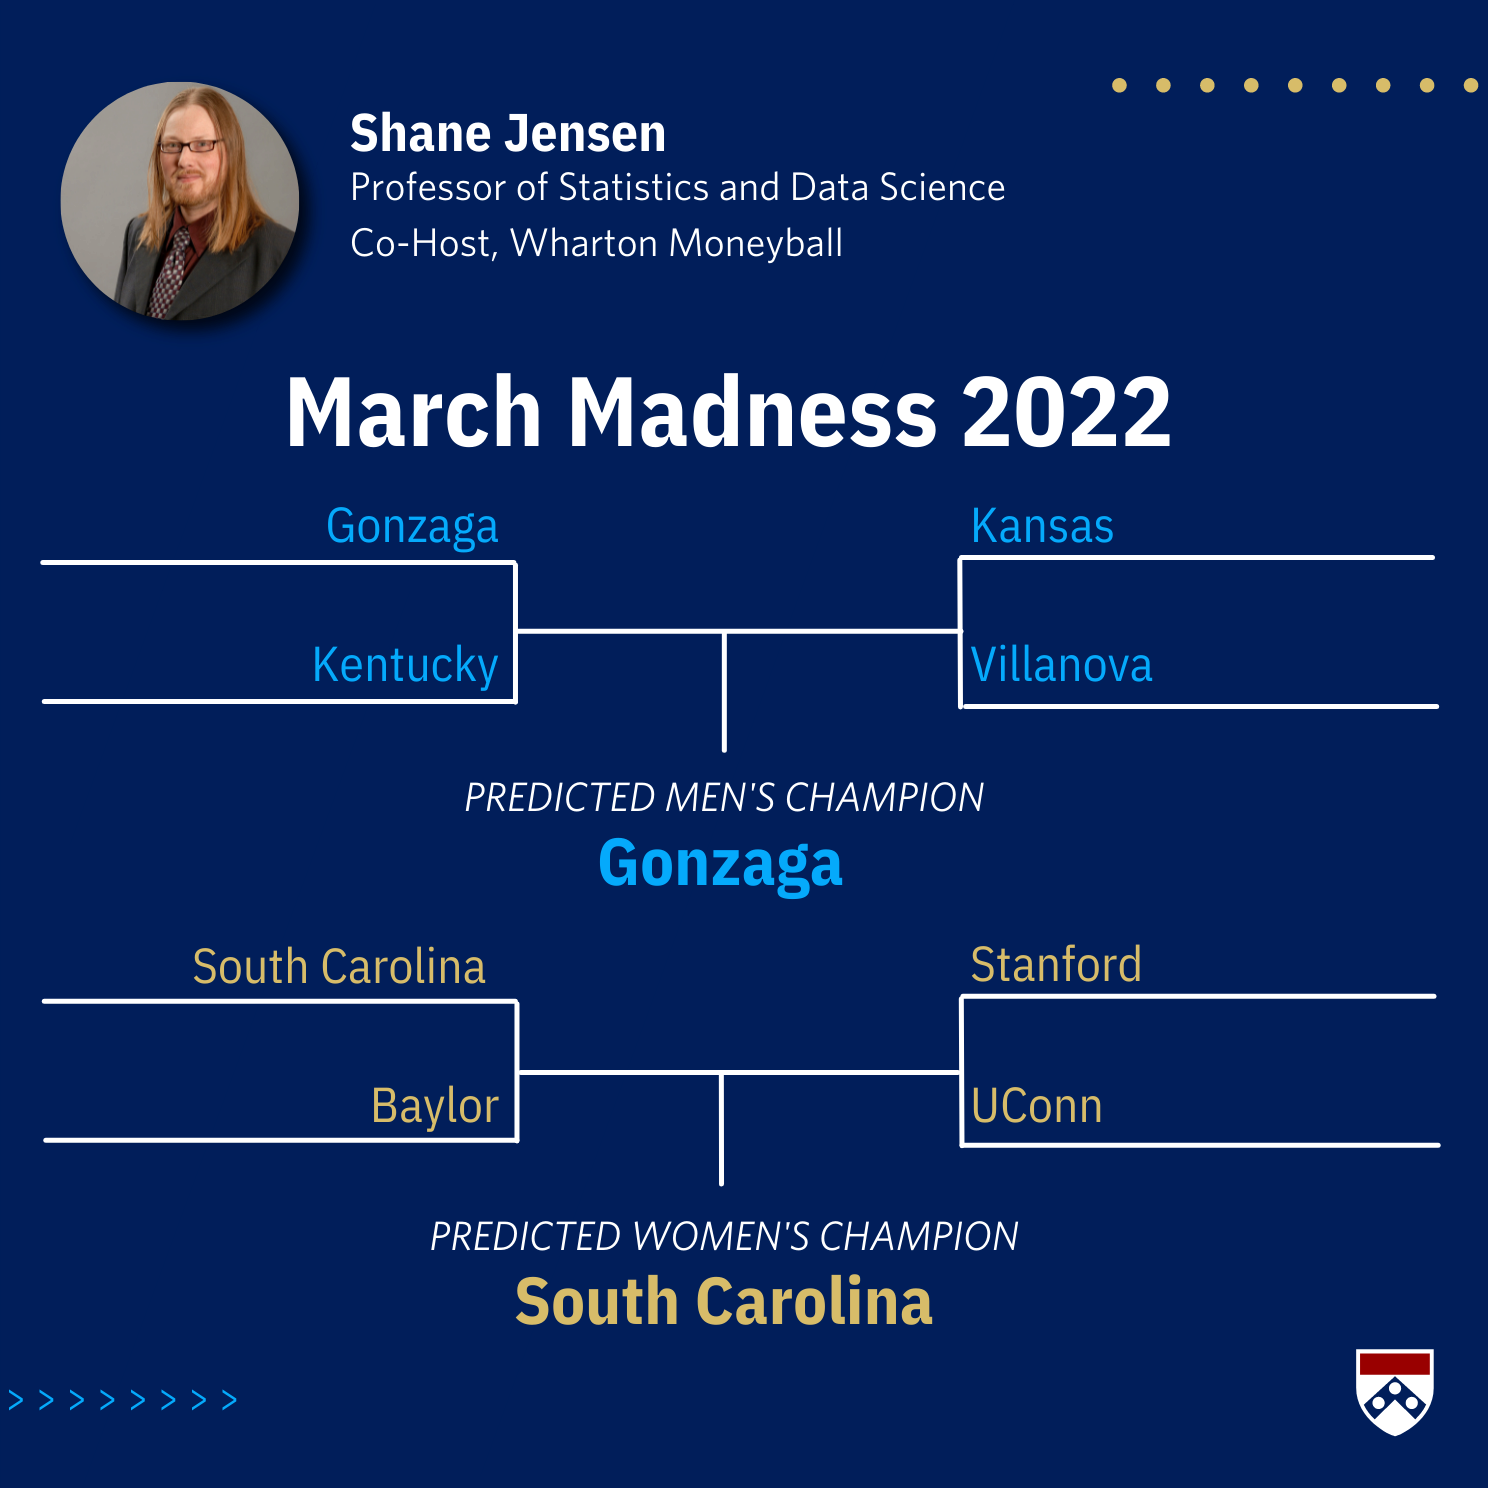 Shane Jensen's Final Four Predictions